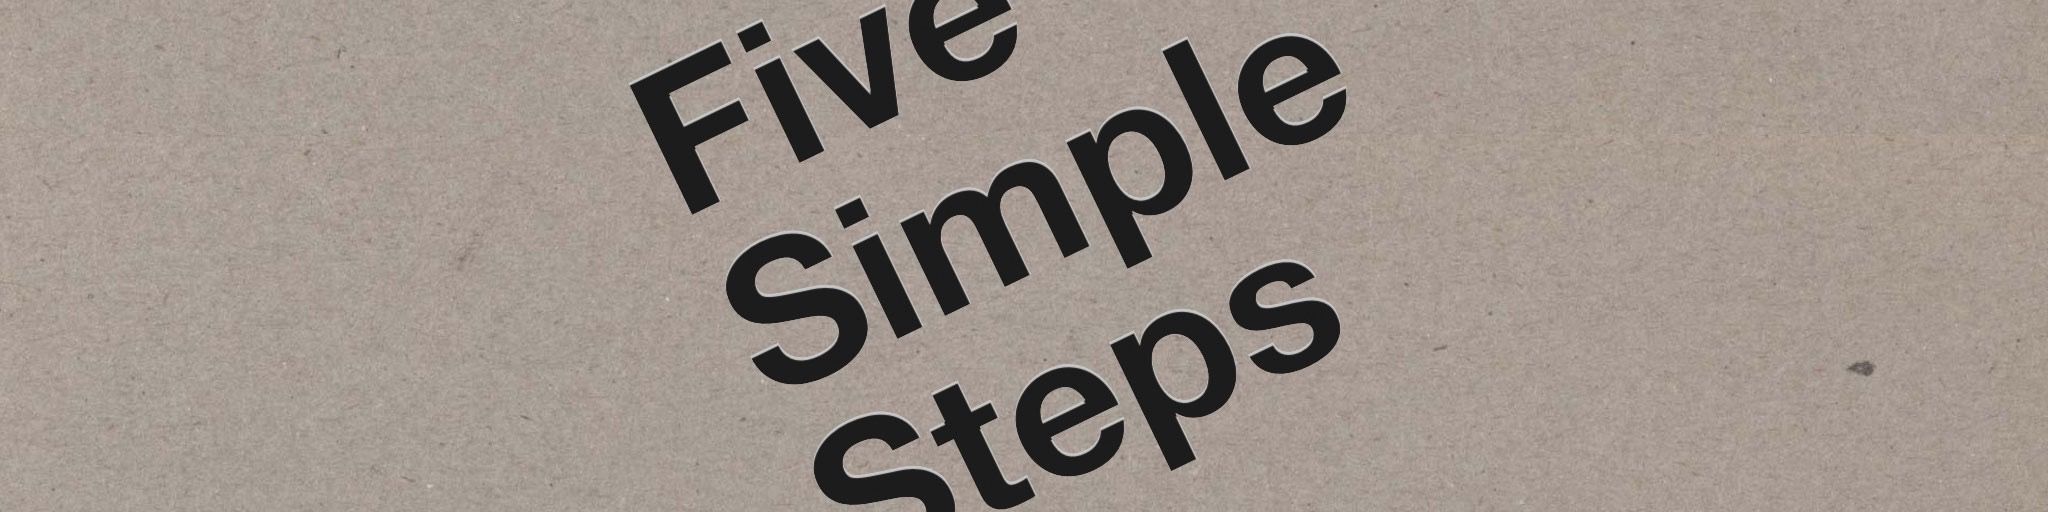 Five Simple Steps texture